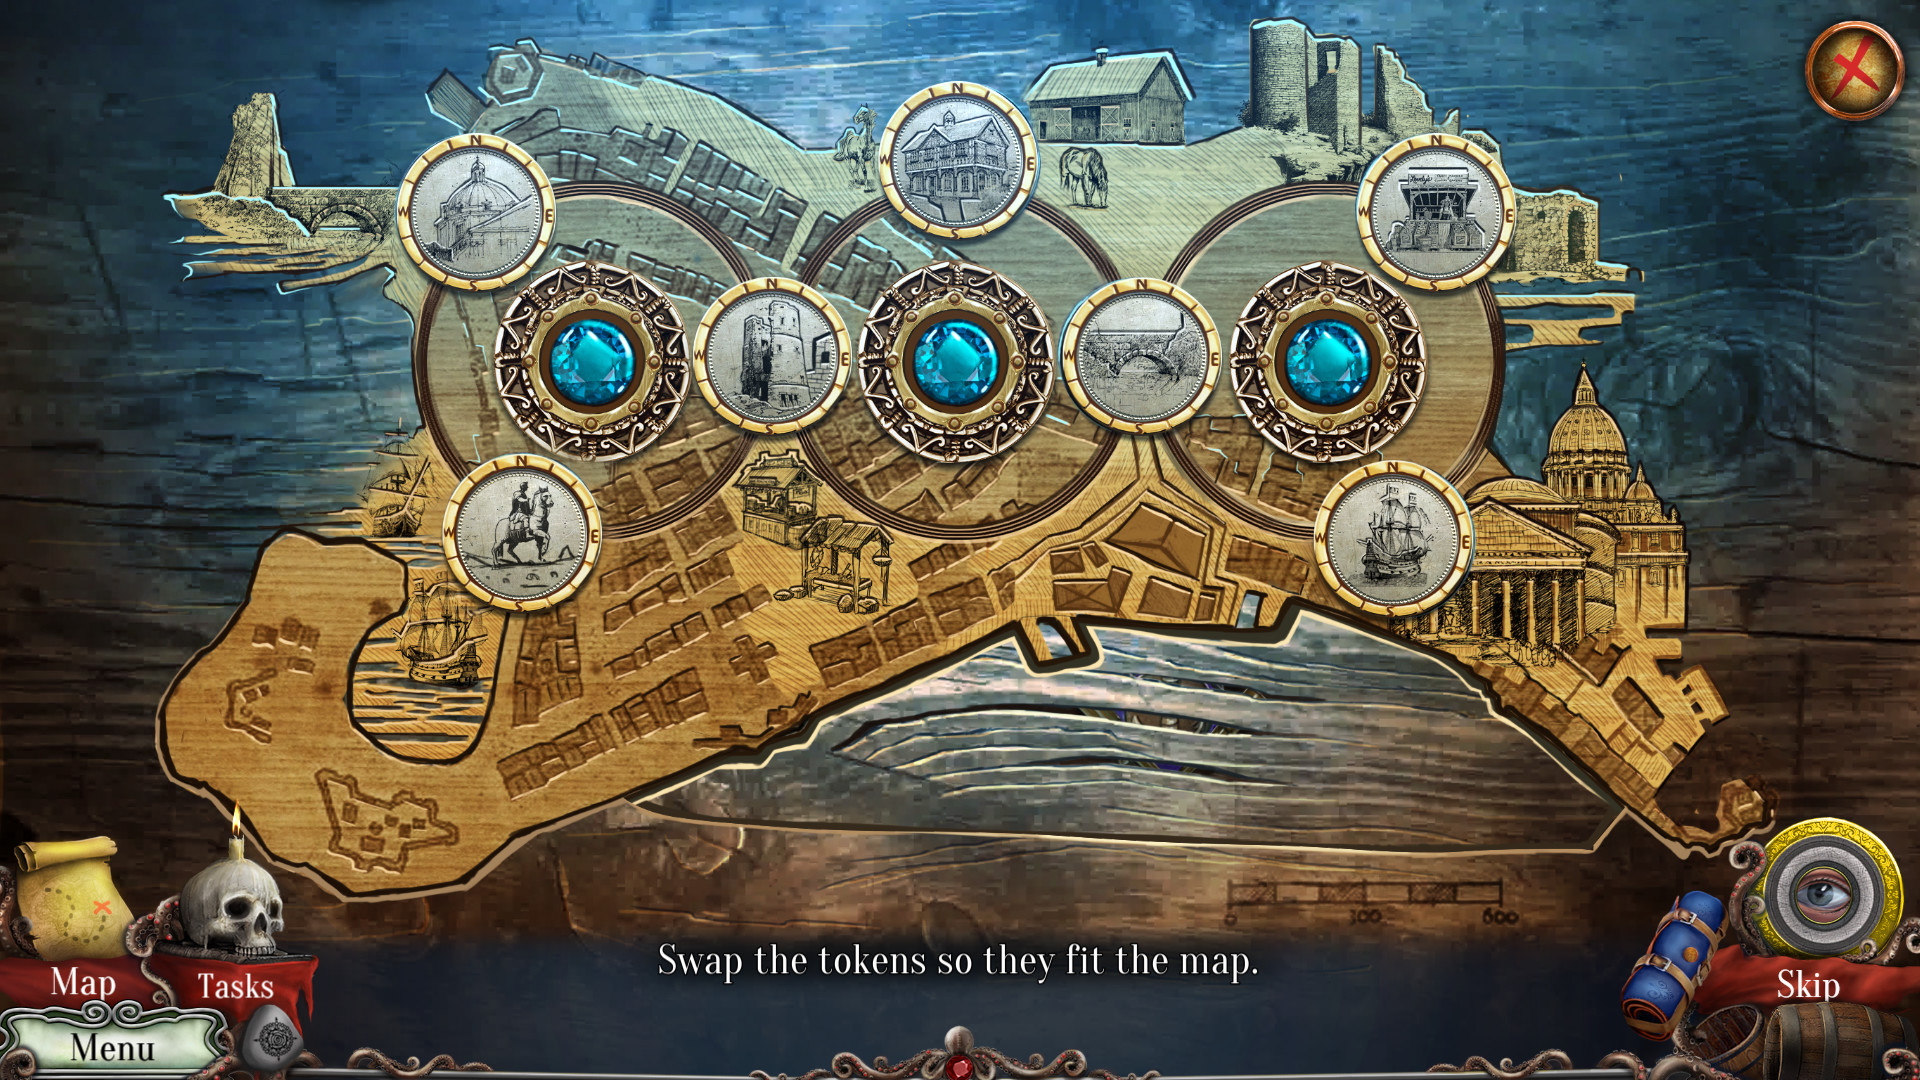 Uncharted Tides: Port Royal screenshot